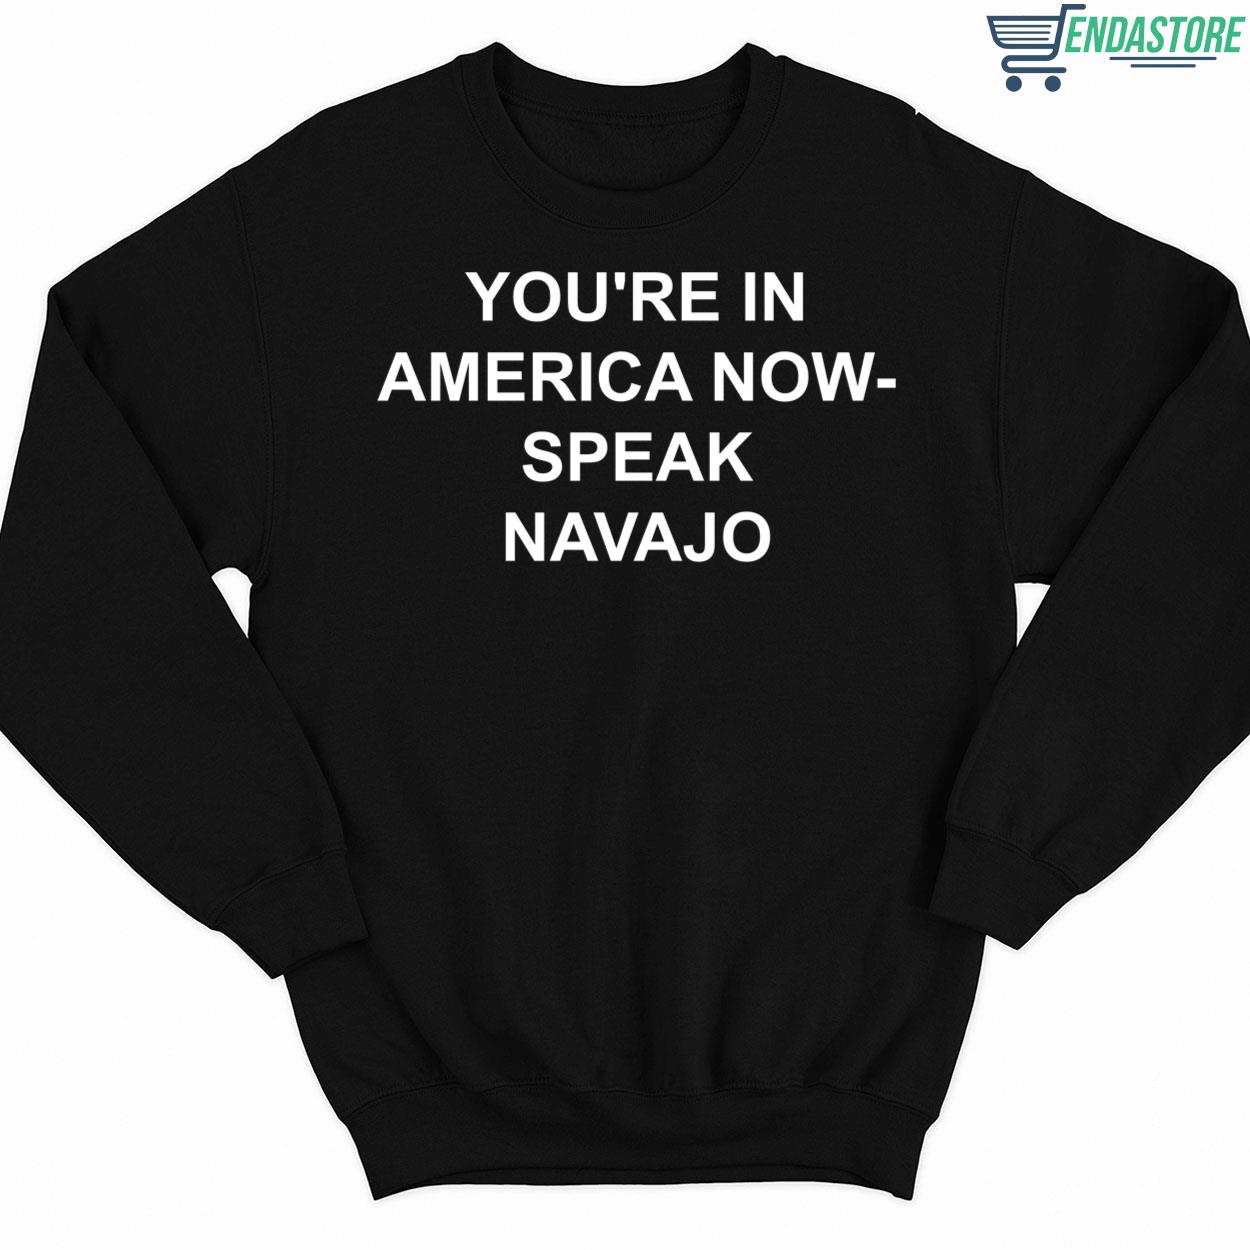 You're In America Now Speak Navajo Shirt - Endastore.com